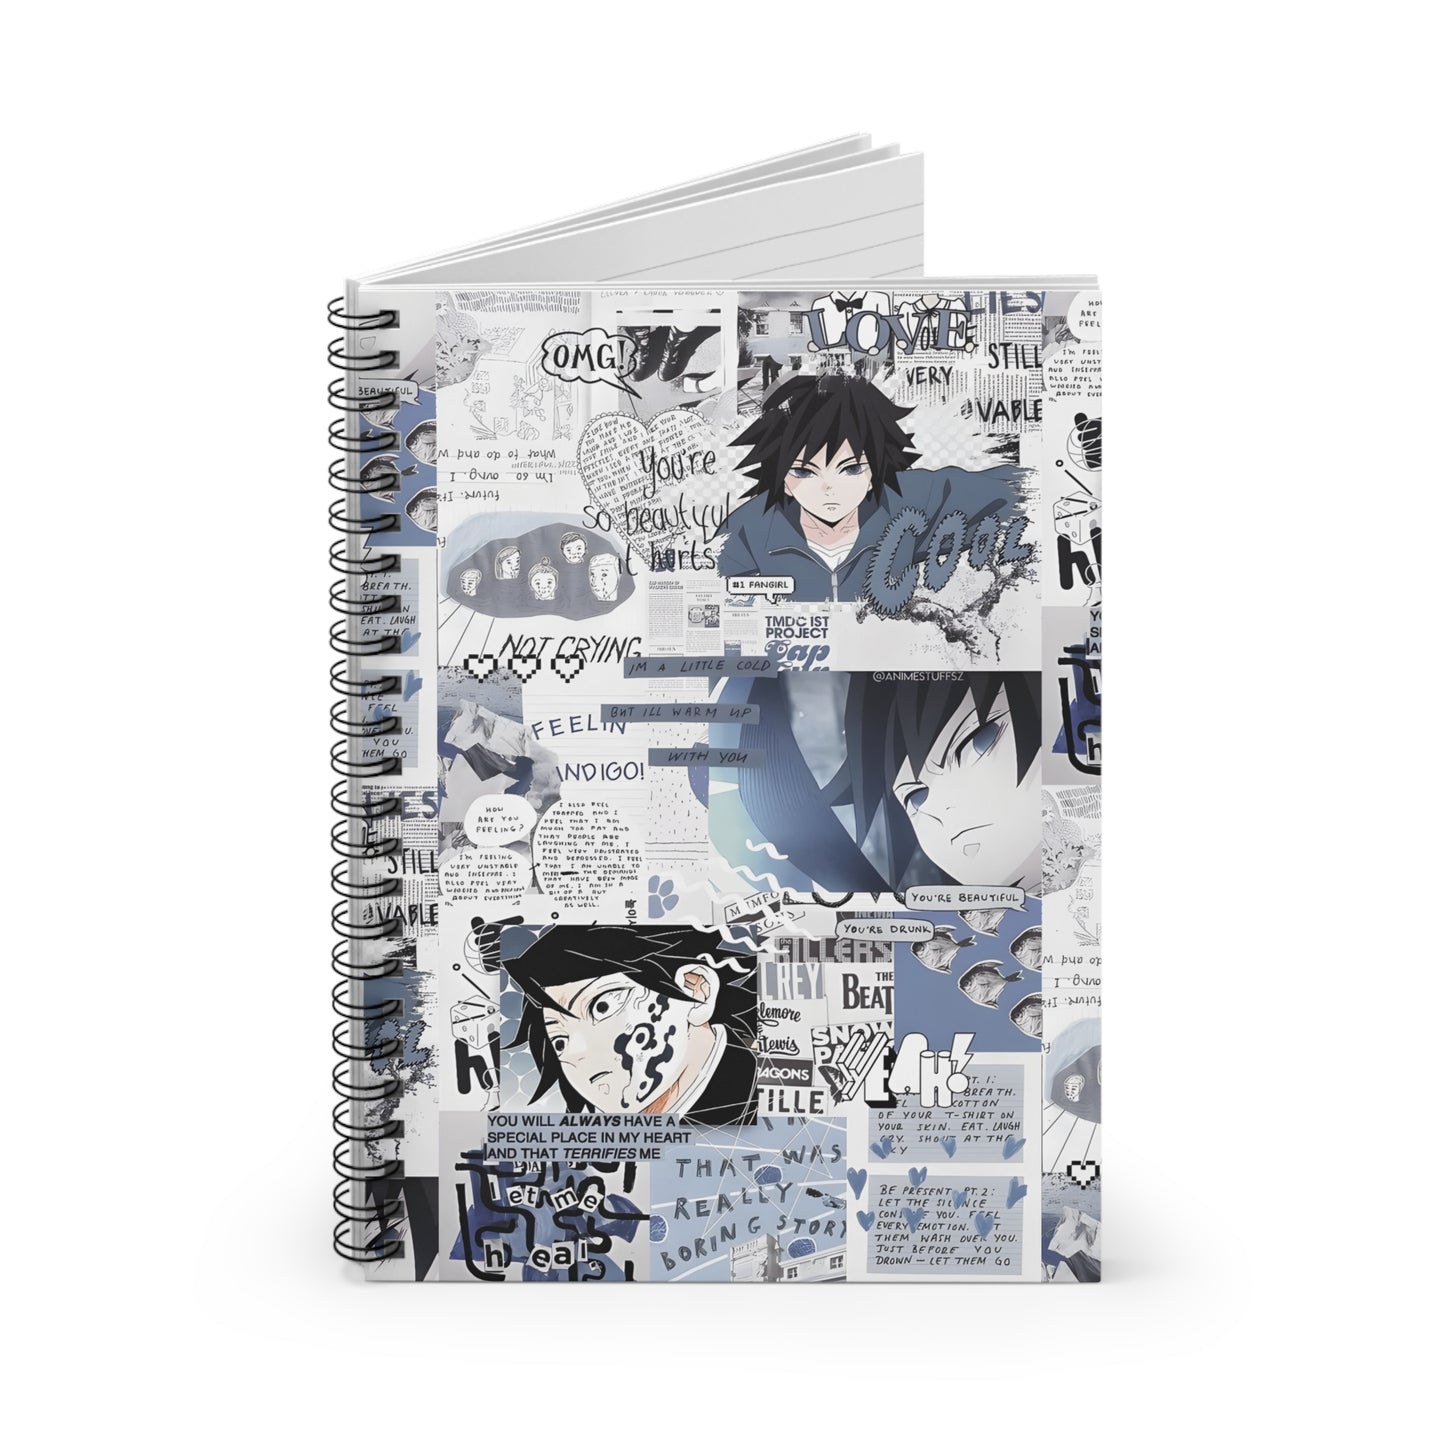 Demon Slayer Giyu Aesthetic Collage Spiral Notebook - Ruled Line